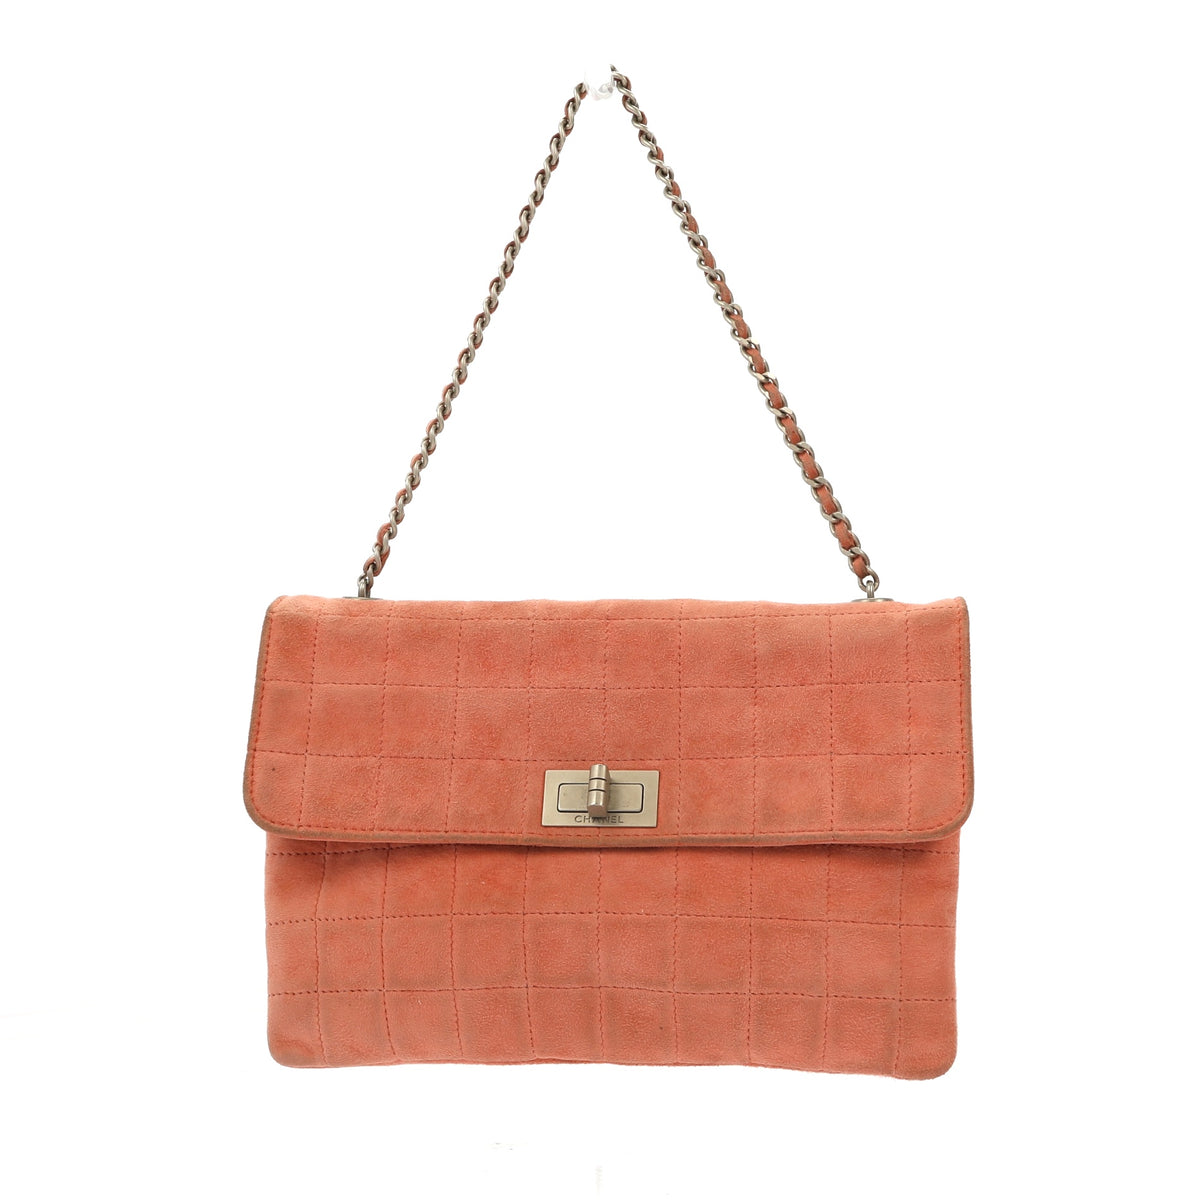 Chanel 2.55 Shoulder Bag in Pink Suede – Fancy Lux